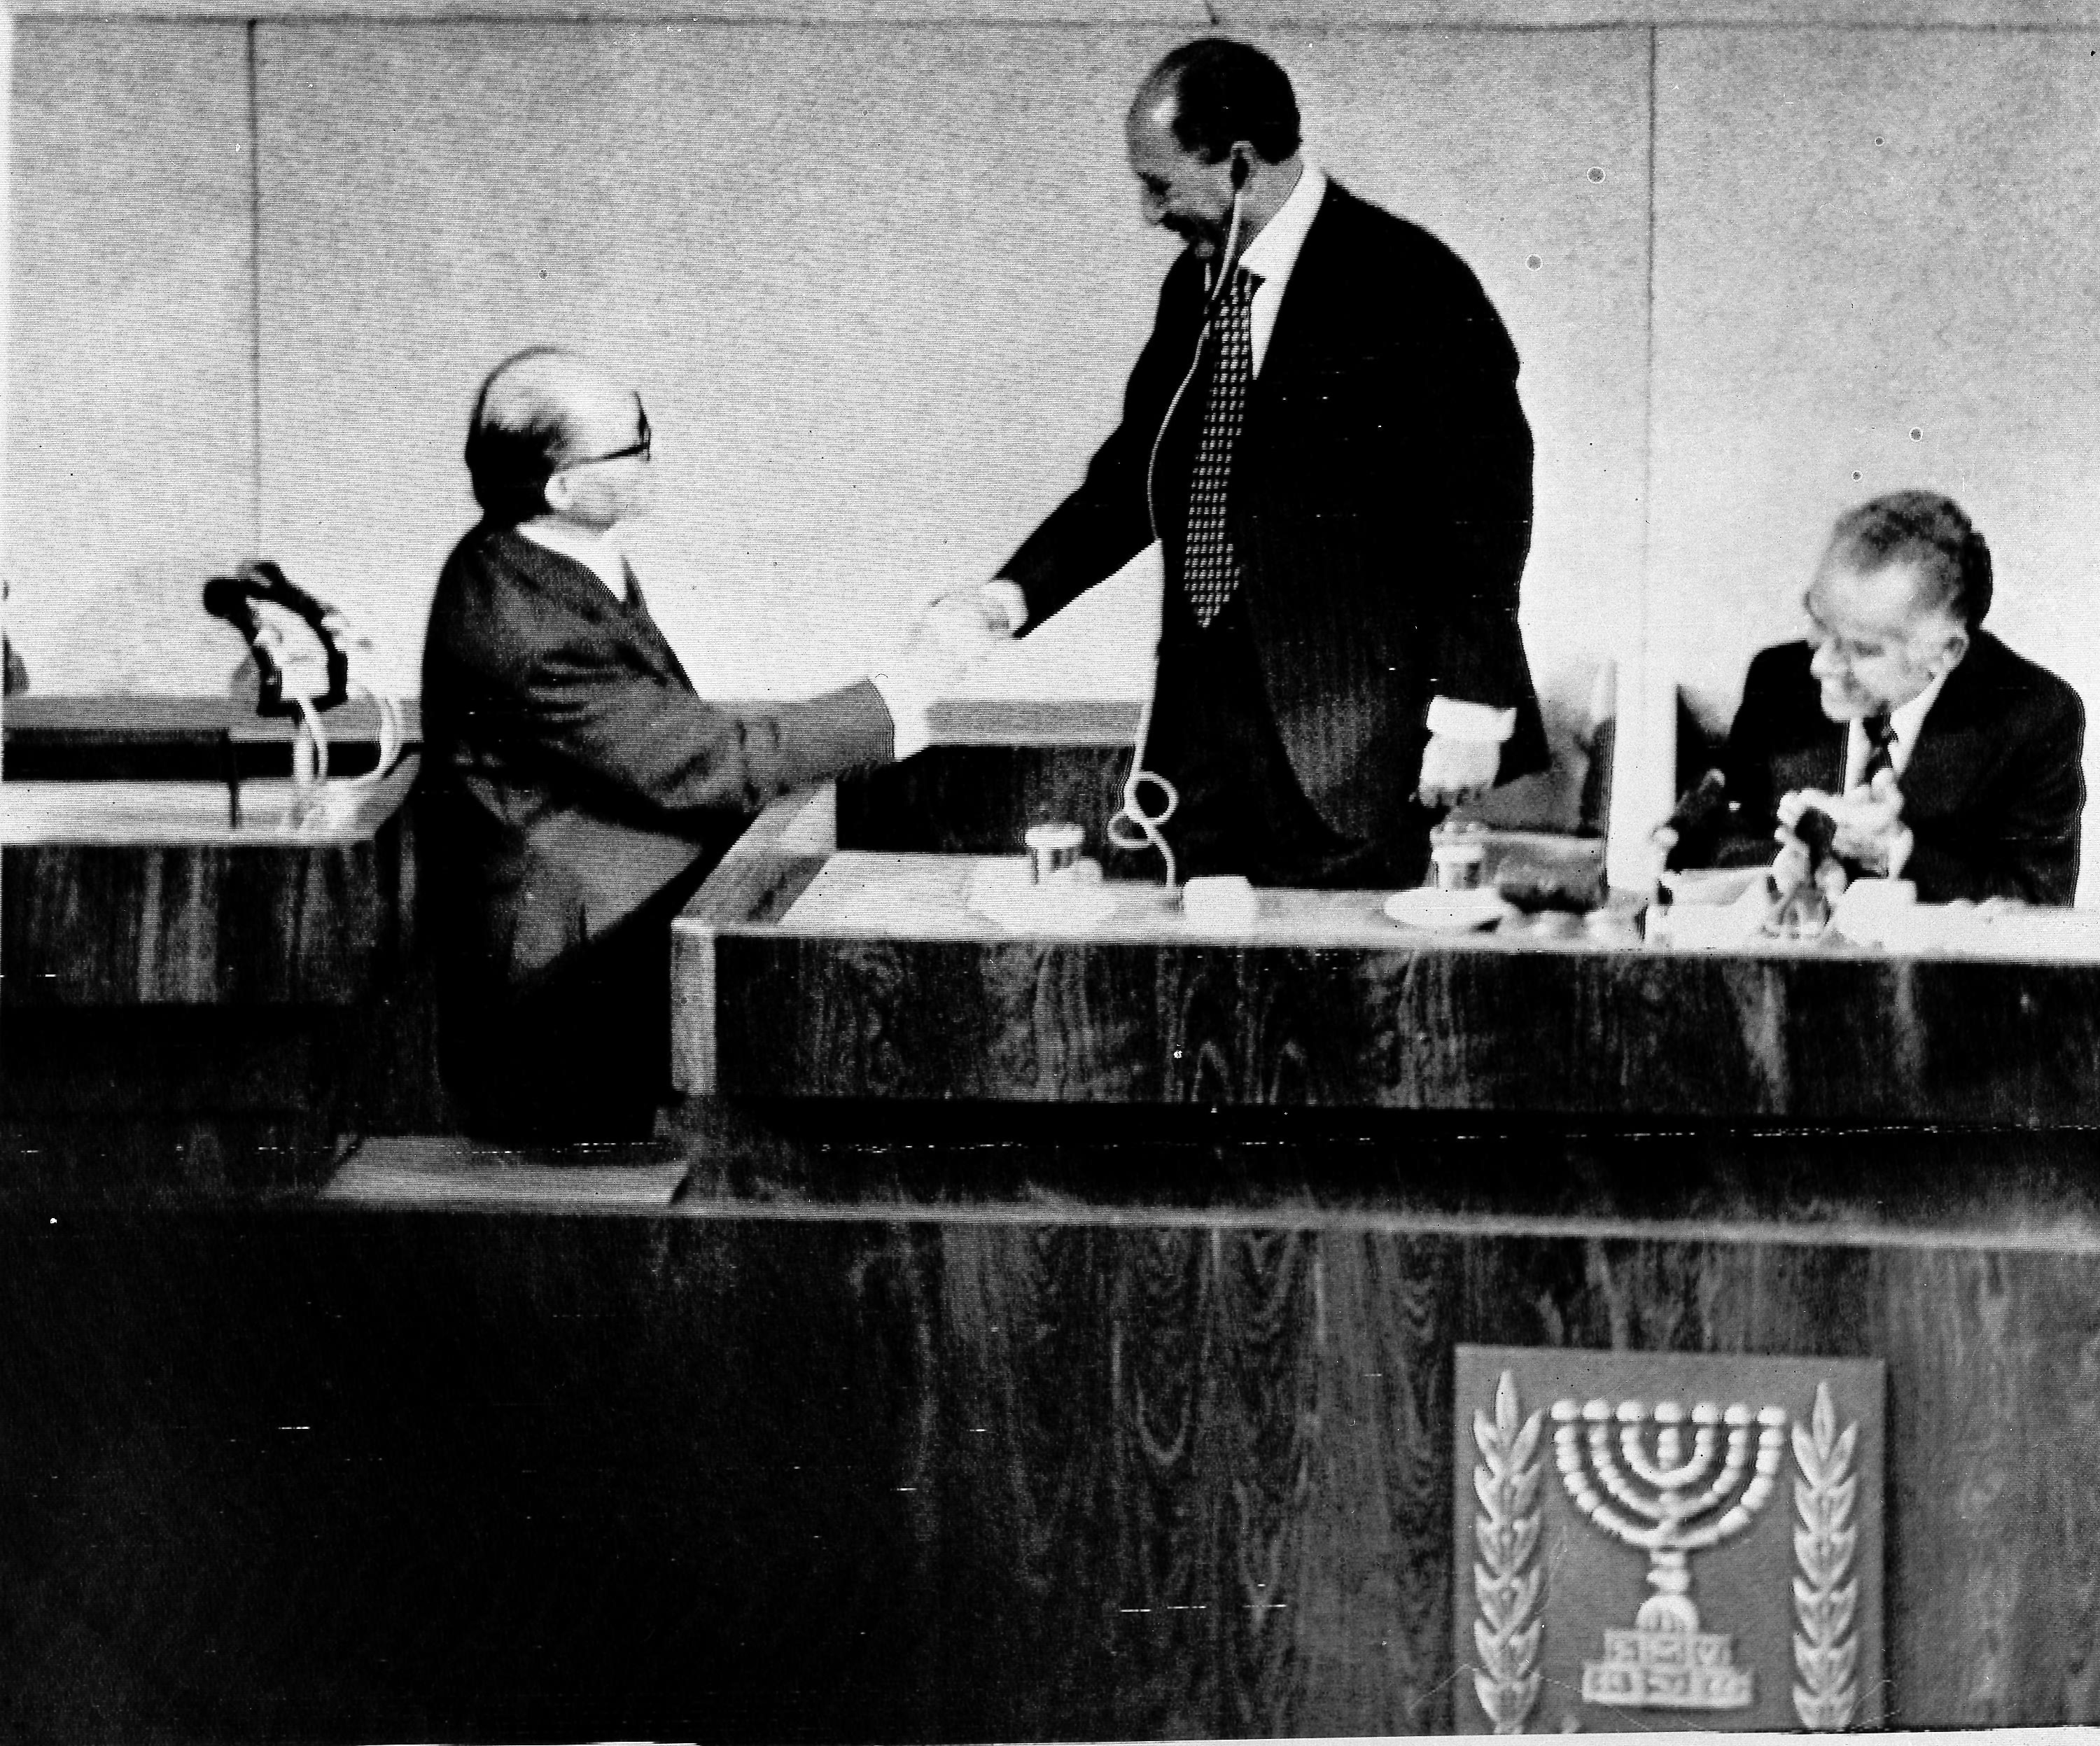 Egyptian President Anwar Sadat shakes hands with Israeli Prime Minister Menachem Begin in the Knesset on November 20, 1977 [Shmuel Rachmani/AP]